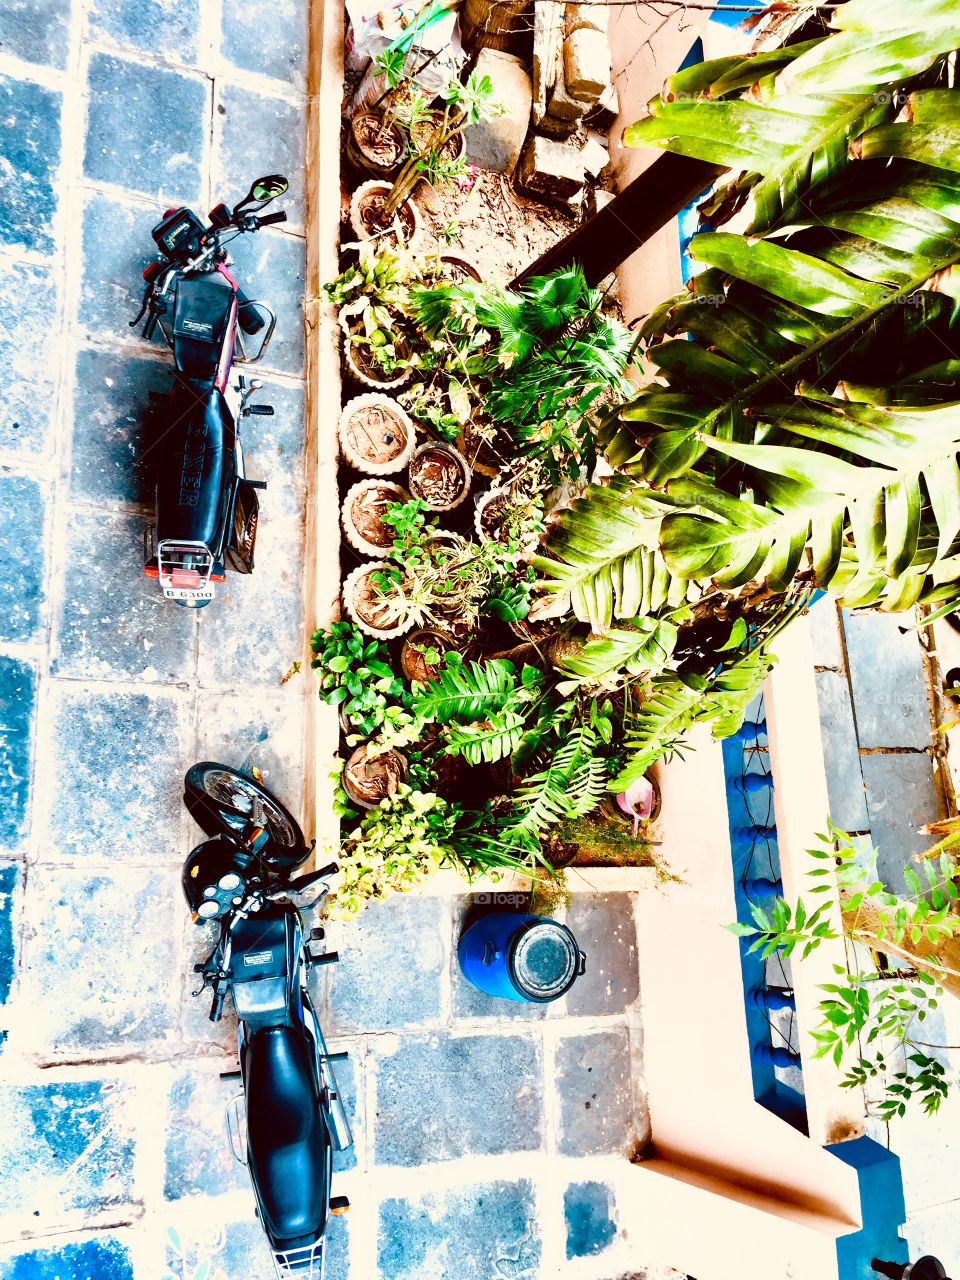 Garden in my colleague’s house